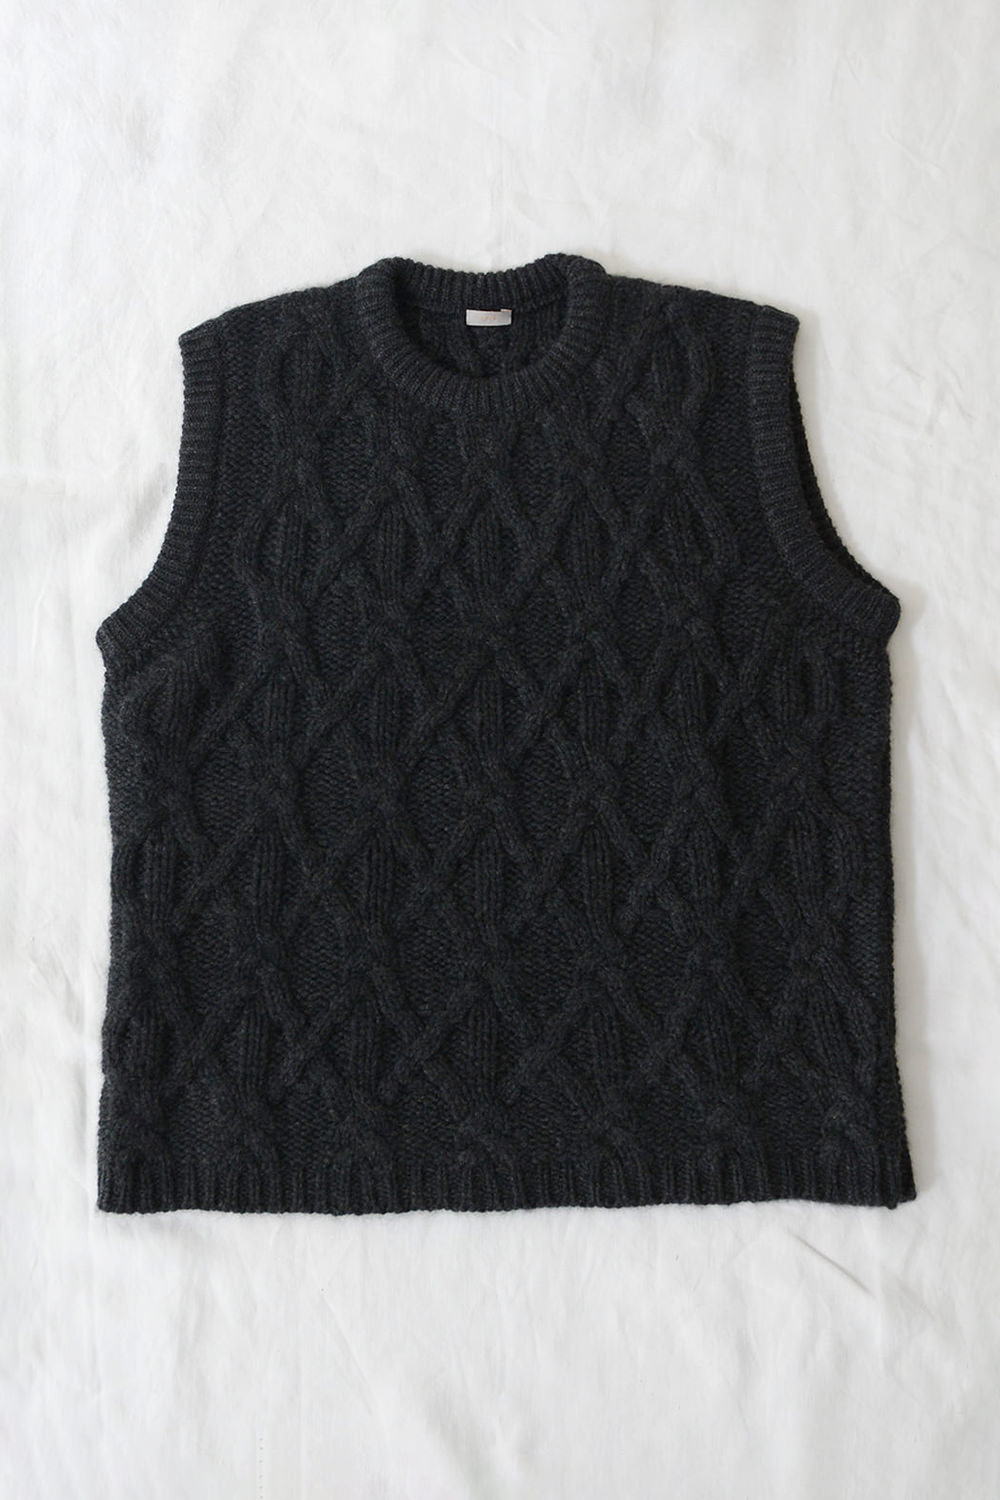 makie cashmere cable knit vest charcoal a top picture